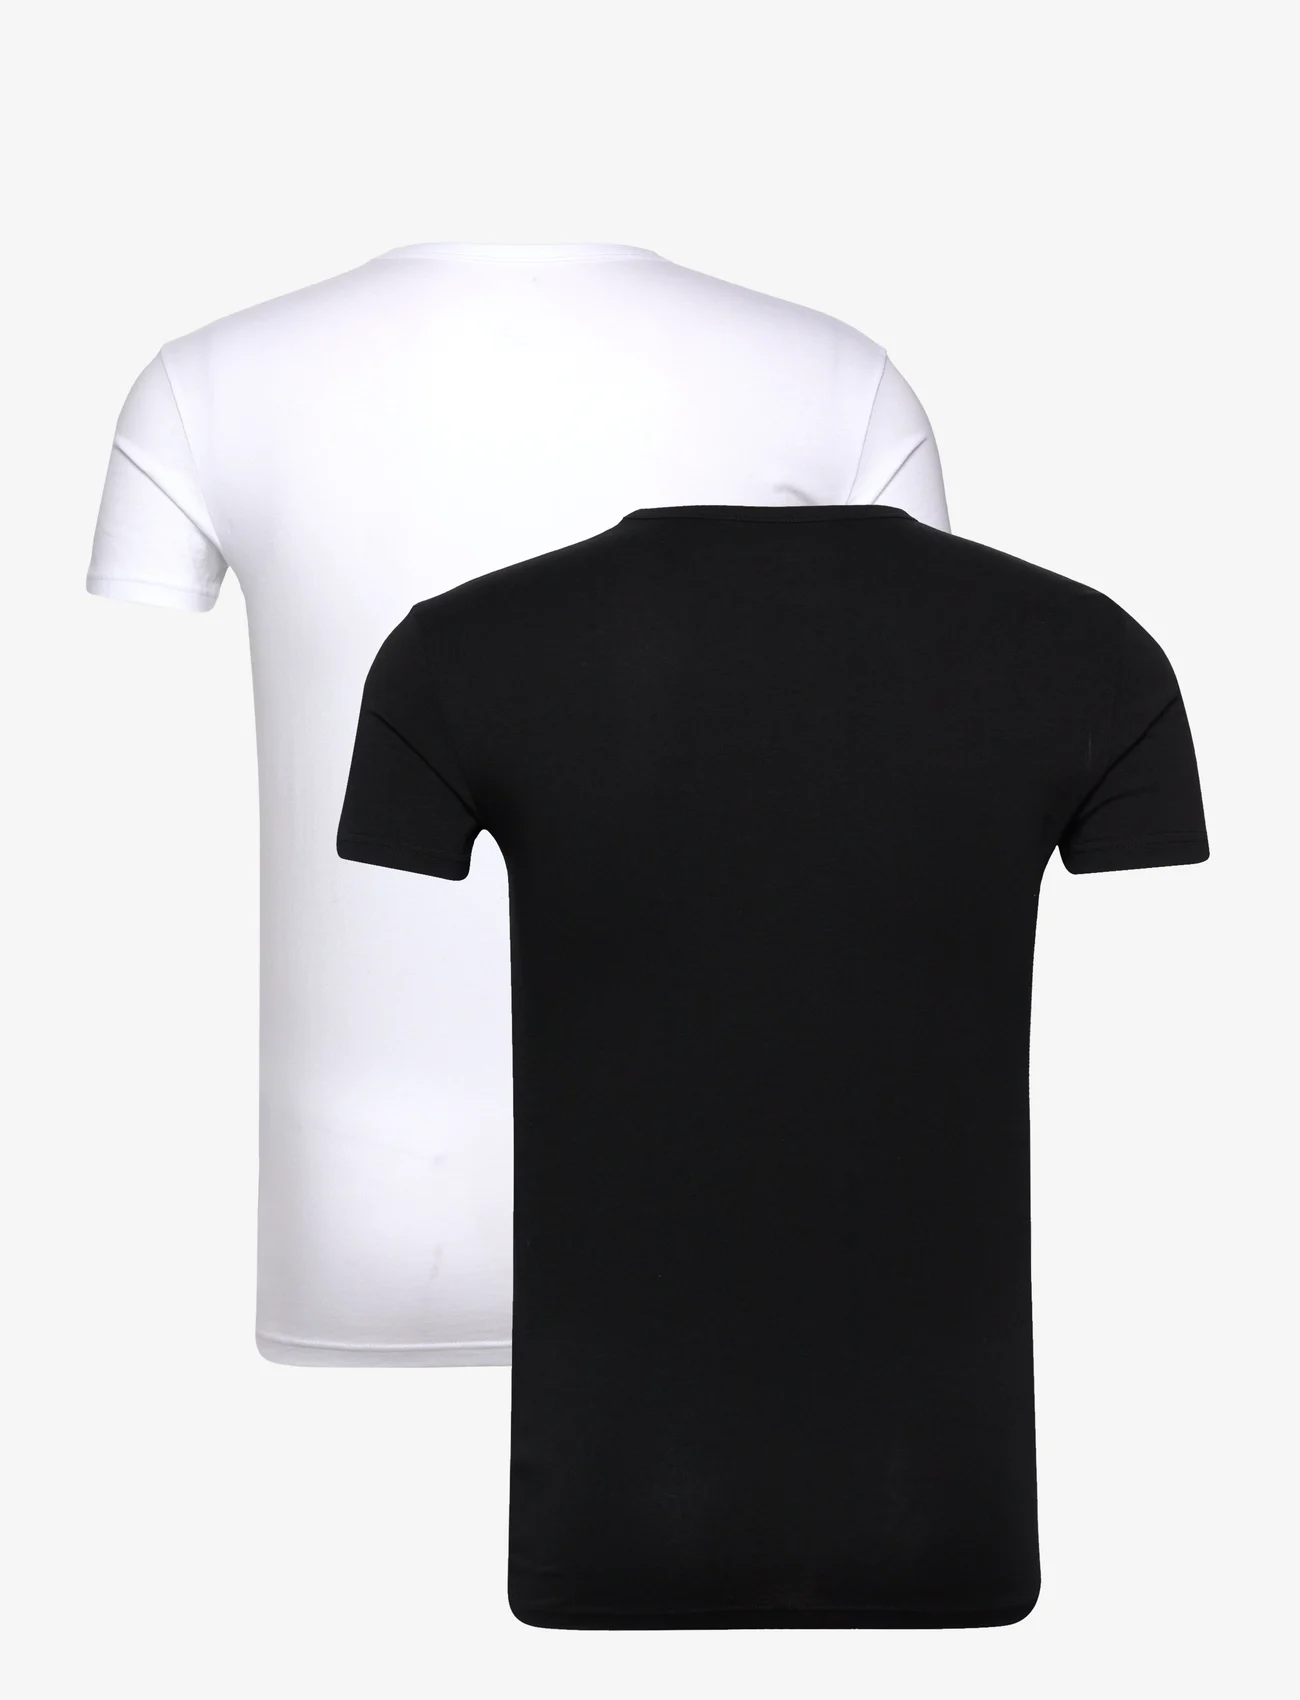 Armani Exchange - MEN'S 2-PACK T-SHIRT - basic t-shirts - 42520-black/white - 1